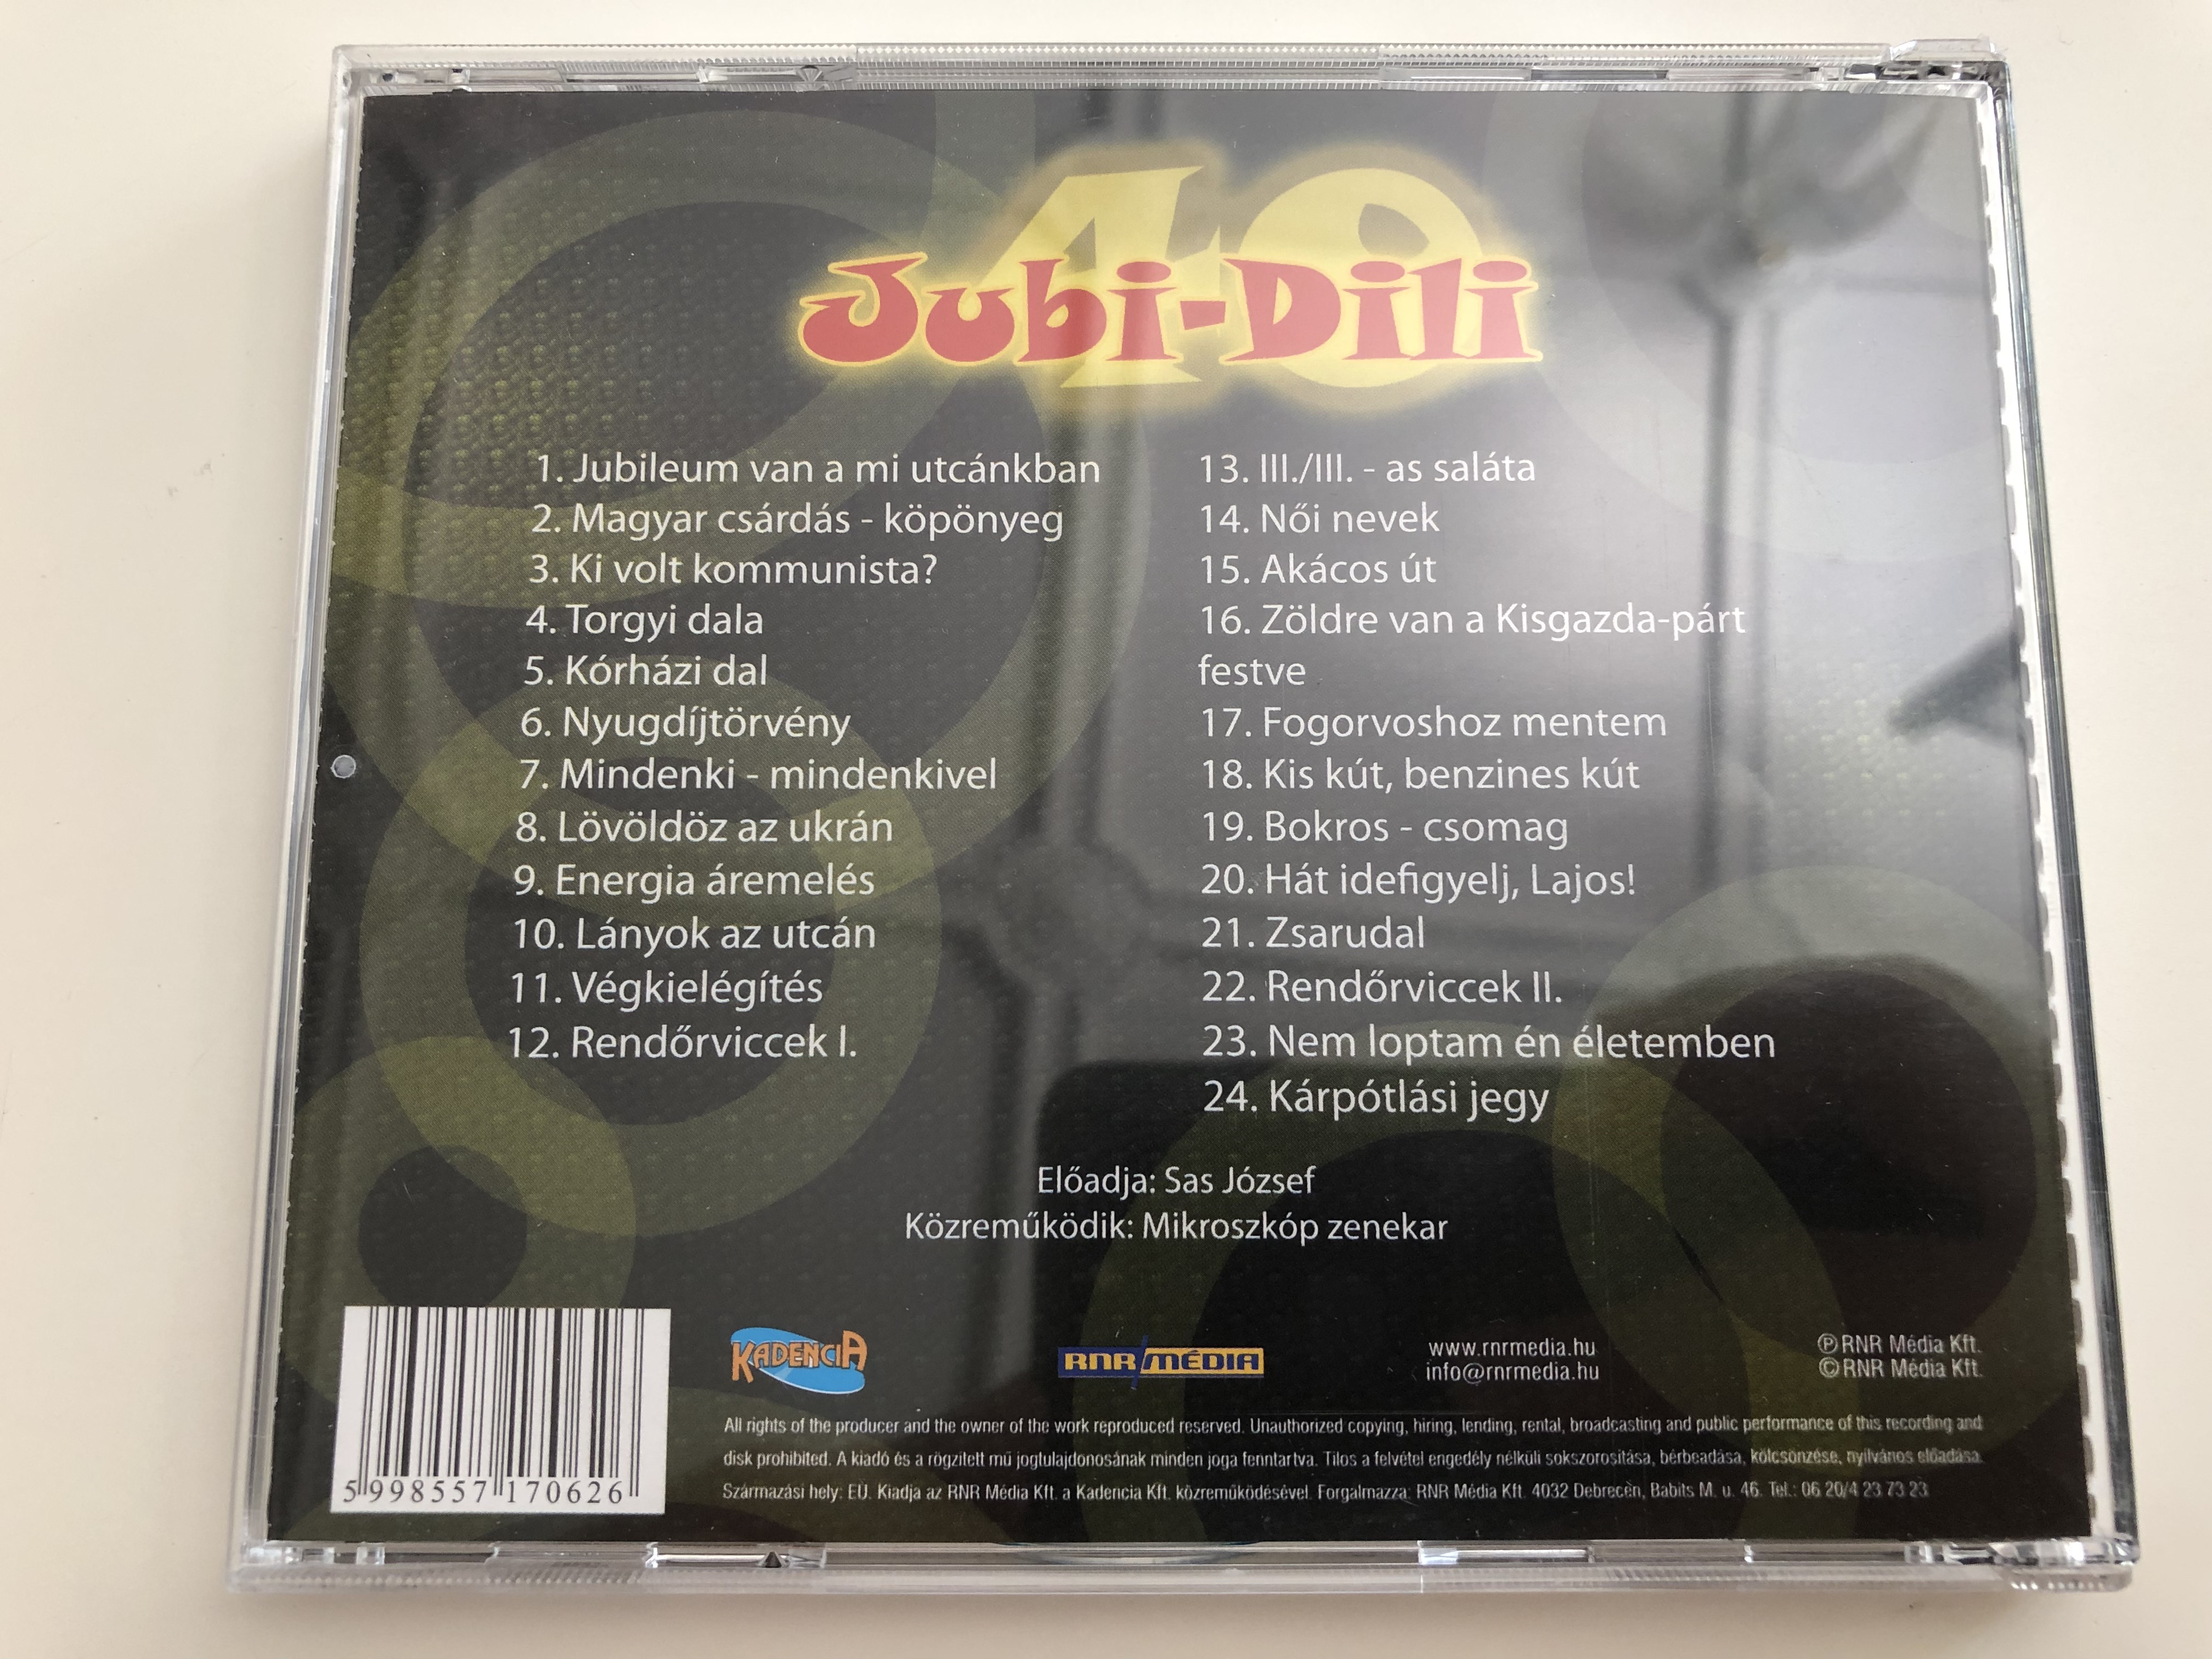 sas-kabar-40-jubi-dili-sas-j-zsef-cabaret-k-zrem-k-dik-mikroszk-p-zenekar-audio-cd-07062-rnr-5-.jpg